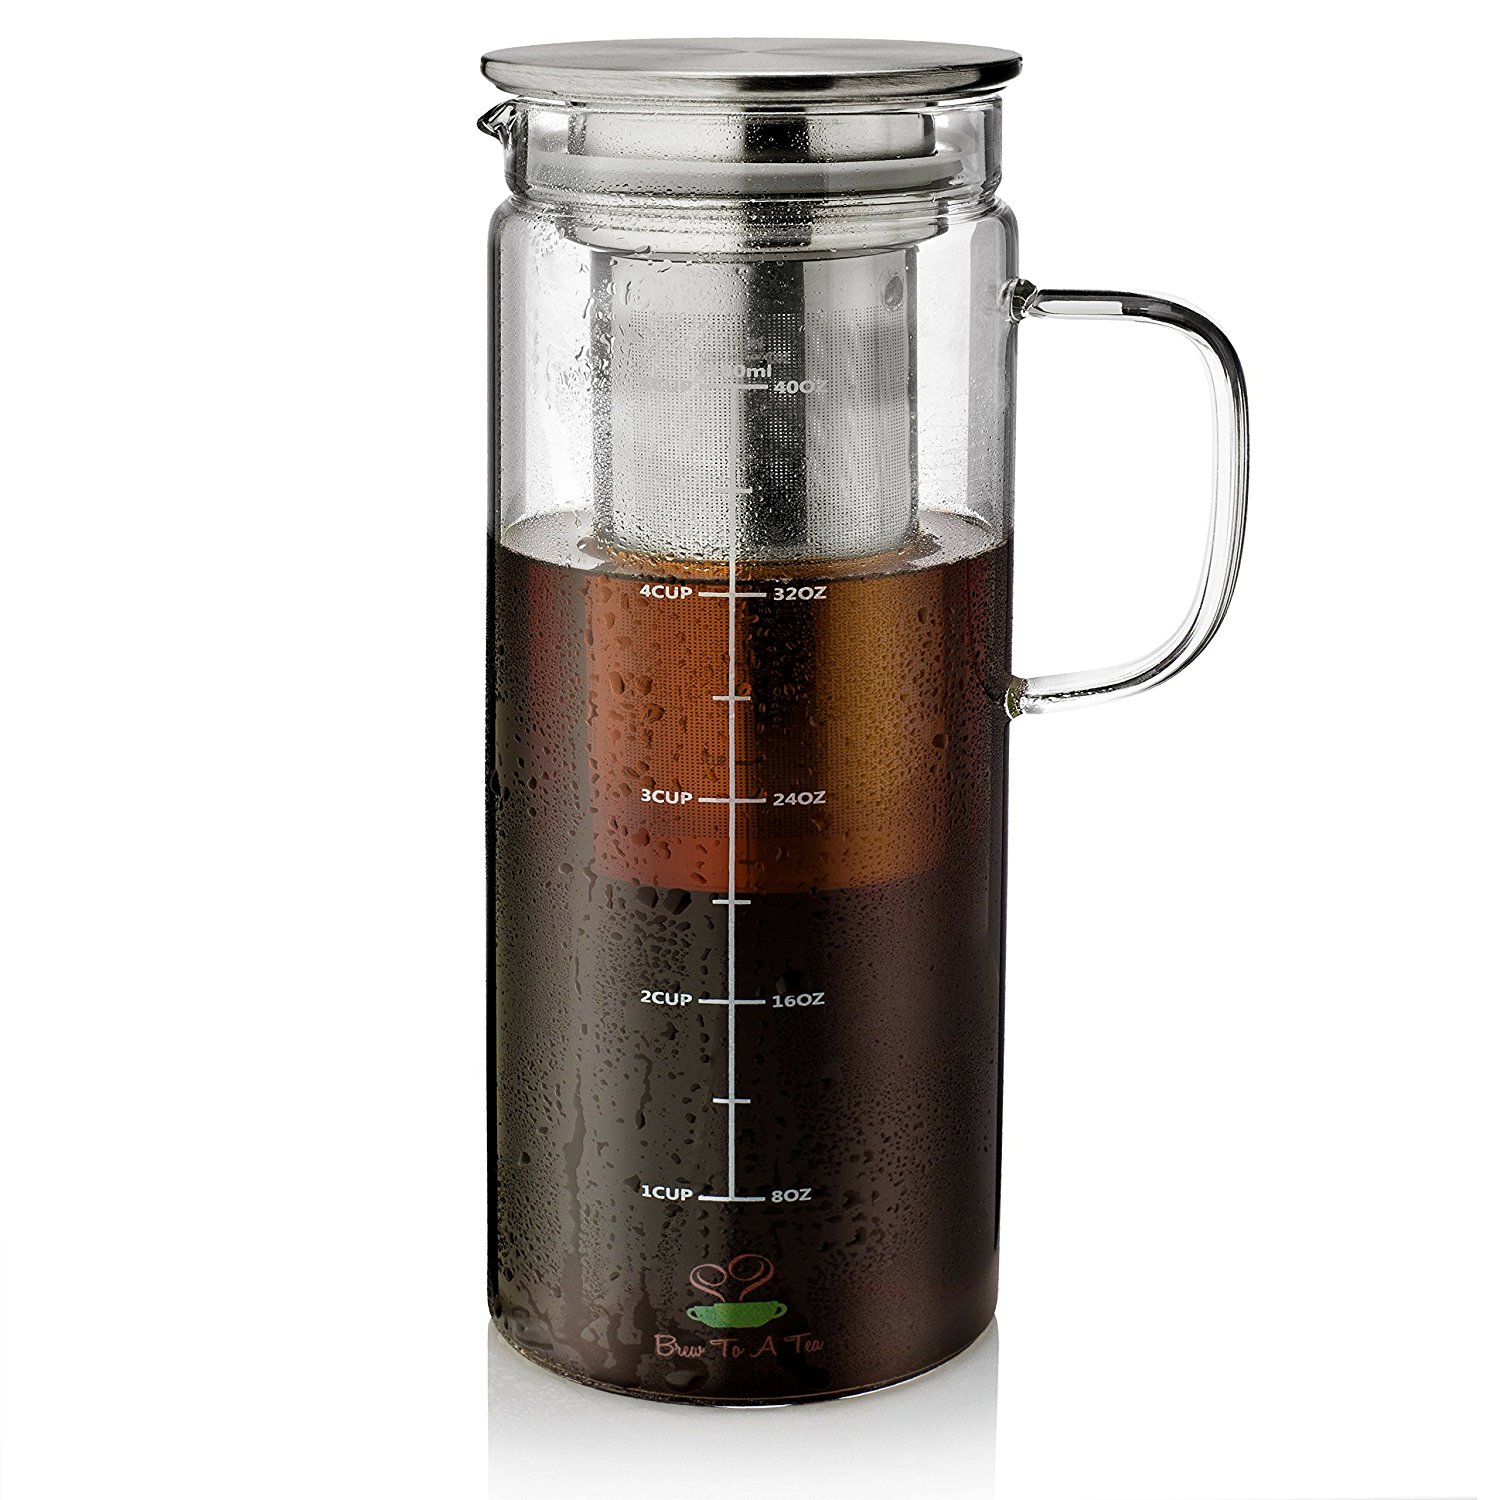 BTäT- Cold Brew Coffee Maker 1.5 Quartz